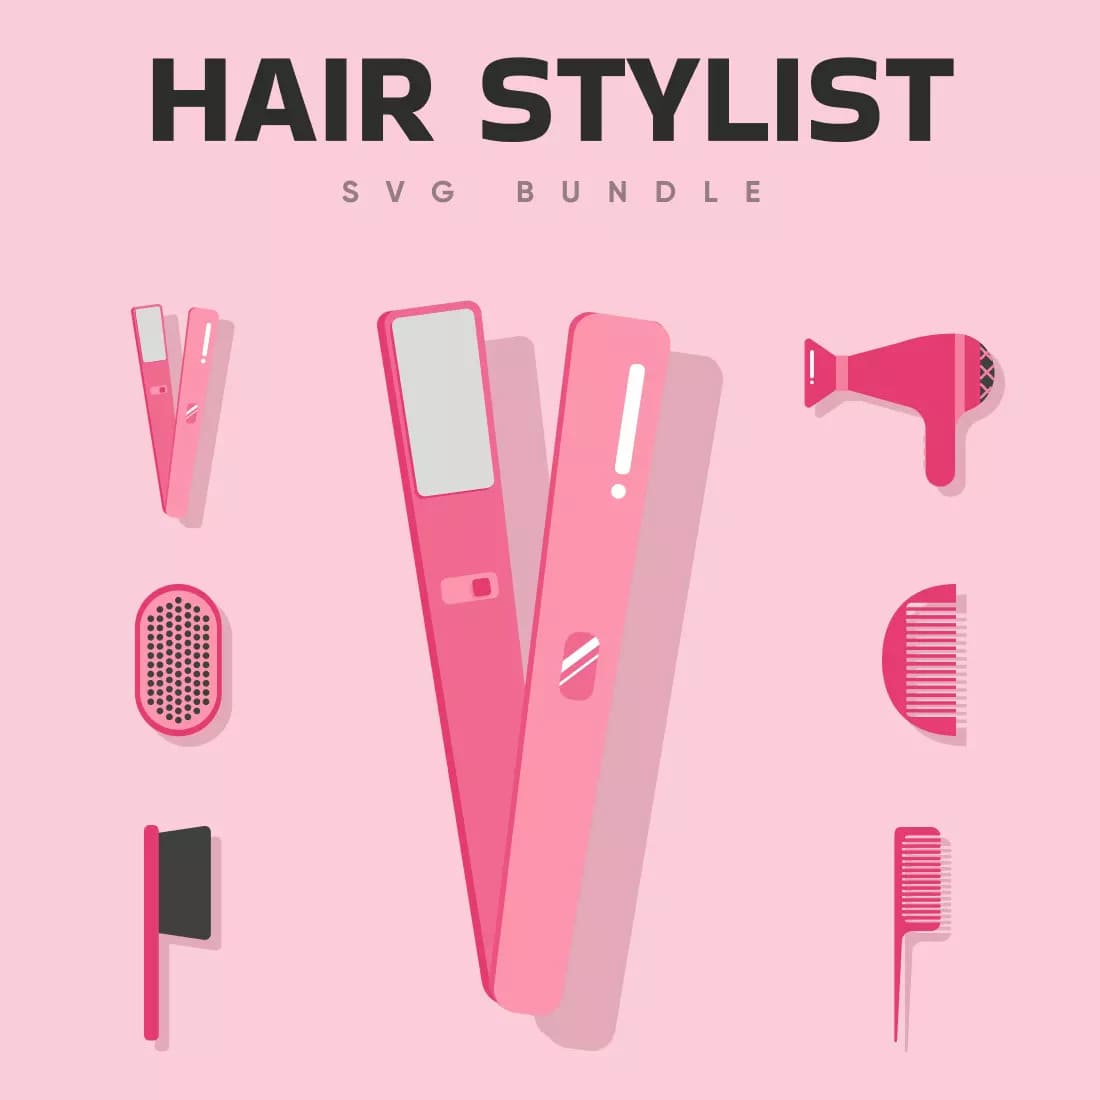 Hair Stylist SVG Bundle Preview 3.